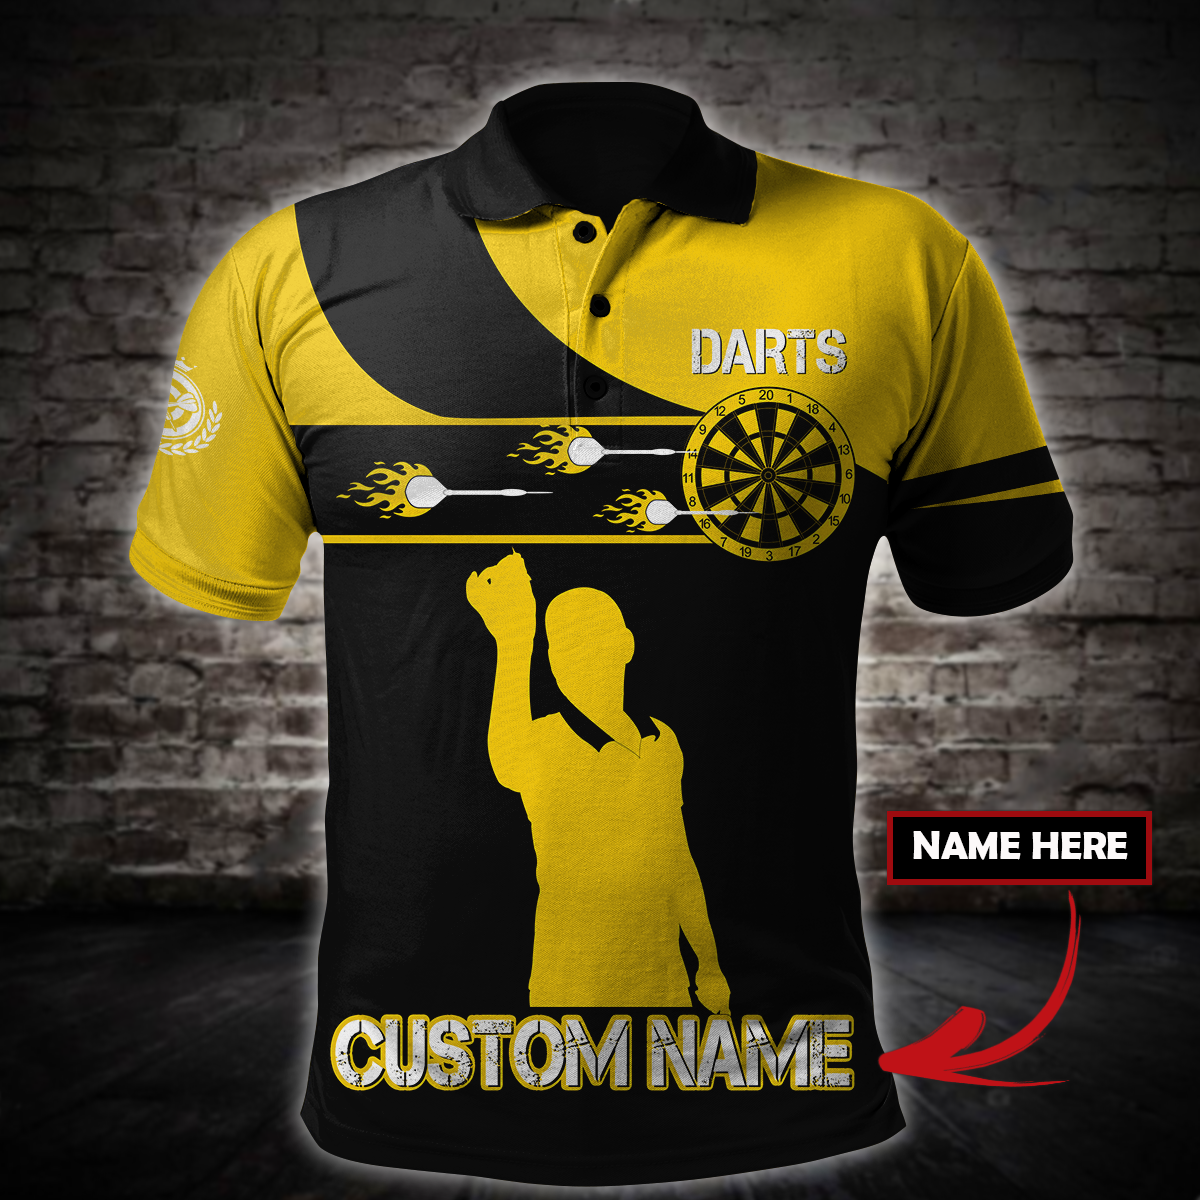 3D All Over Print Dart Polo Shirt/ Custom Name Shirt for Dart Team/ Player